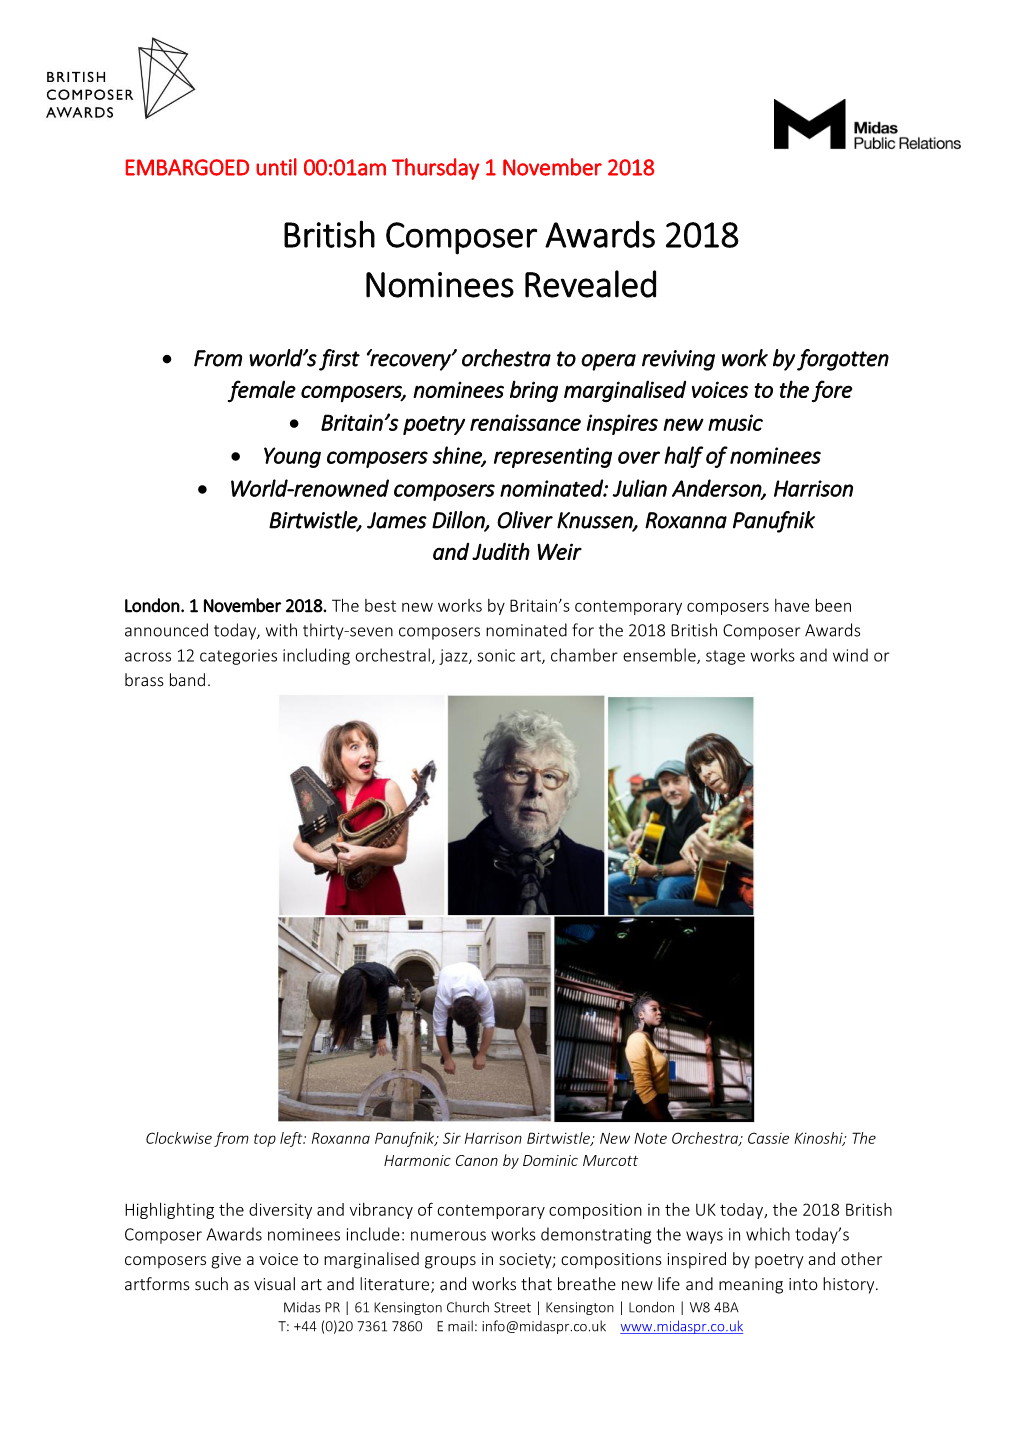 British Composer Awards Nominations 2018 FINAL